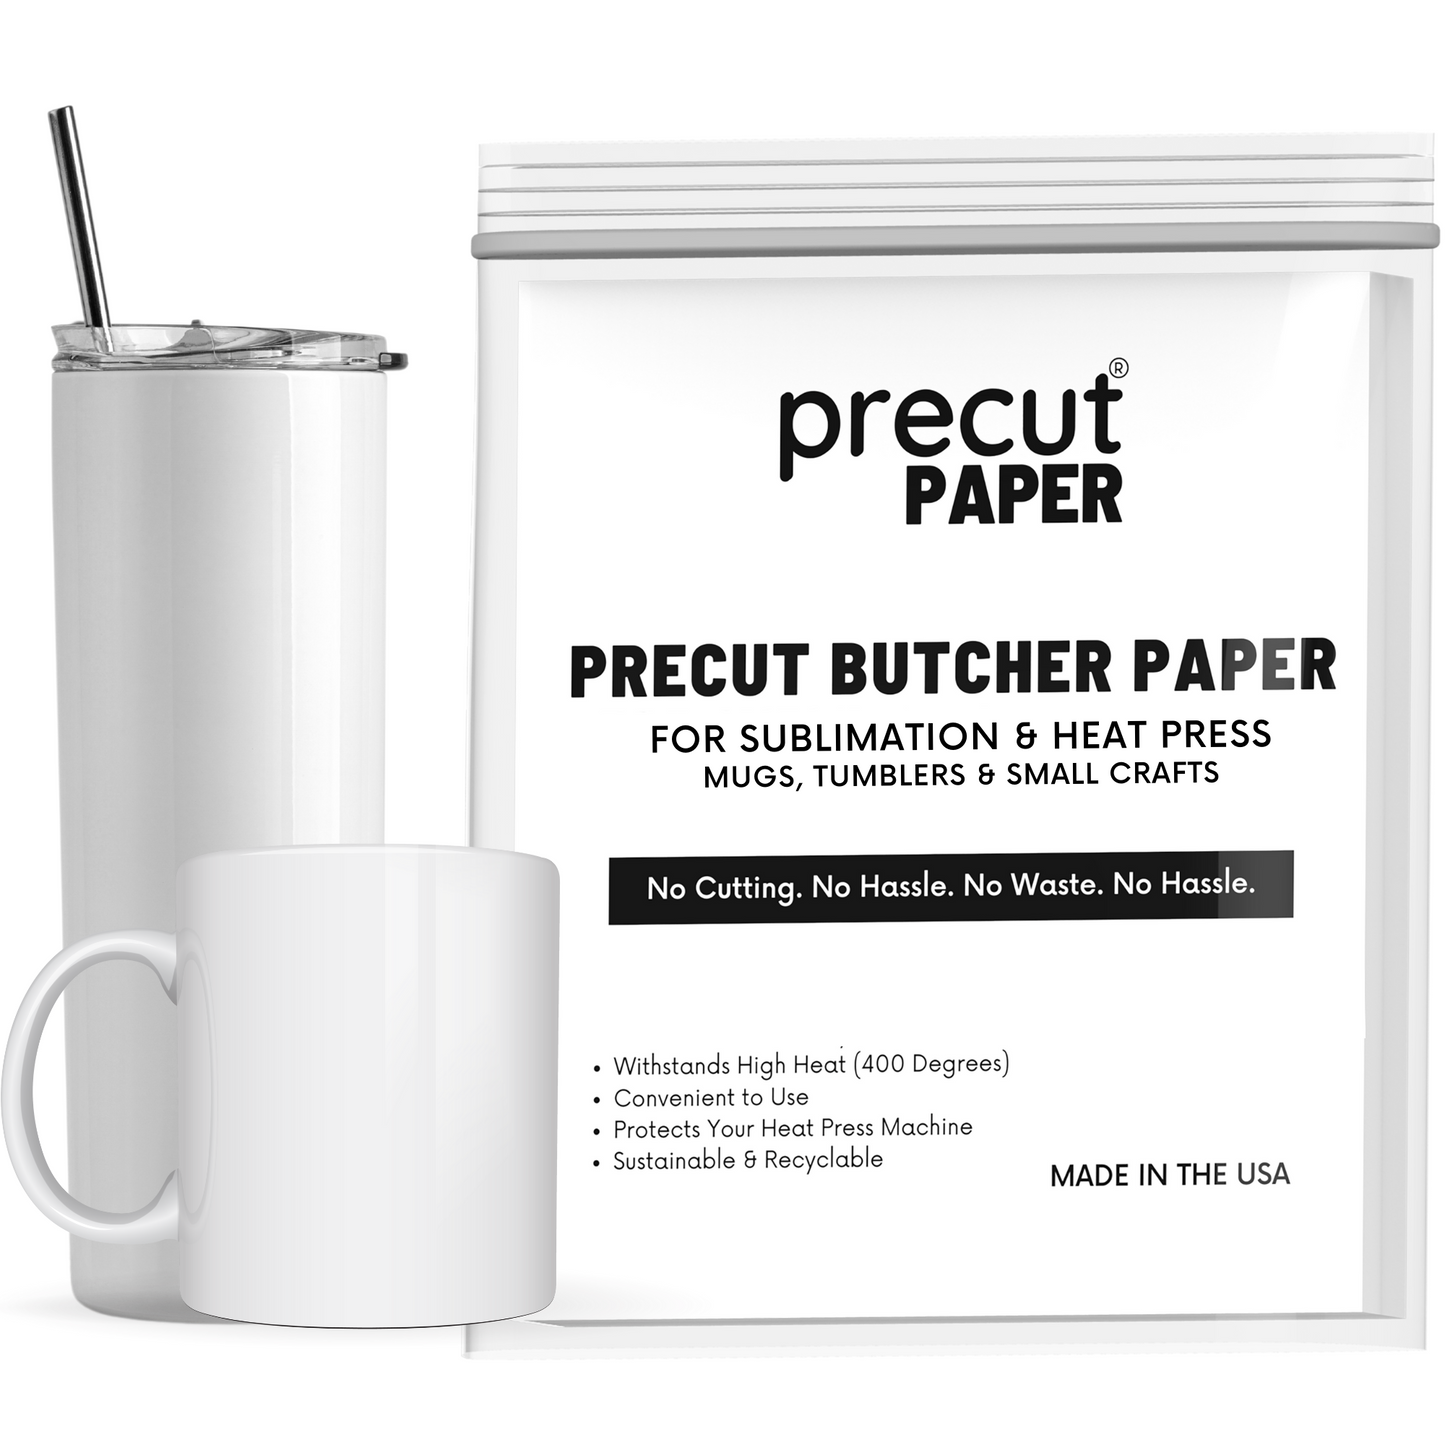 Butcher Paper for Heat Press - Unlocking Heat Press Success!